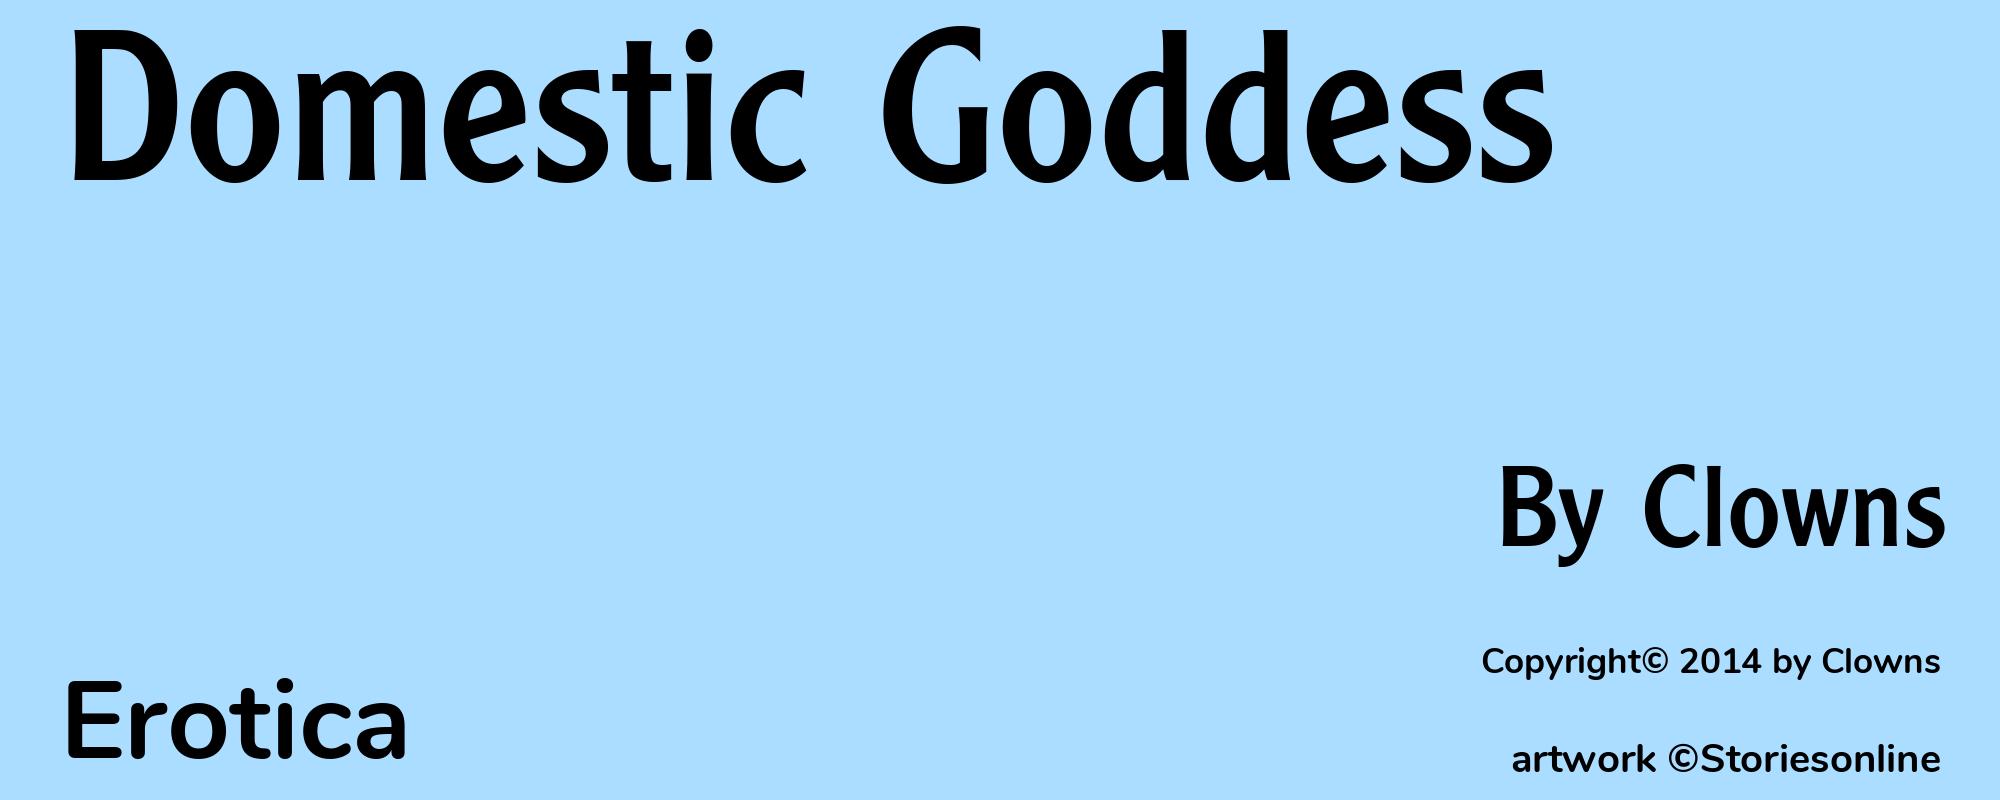 Domestic Goddess - Cover